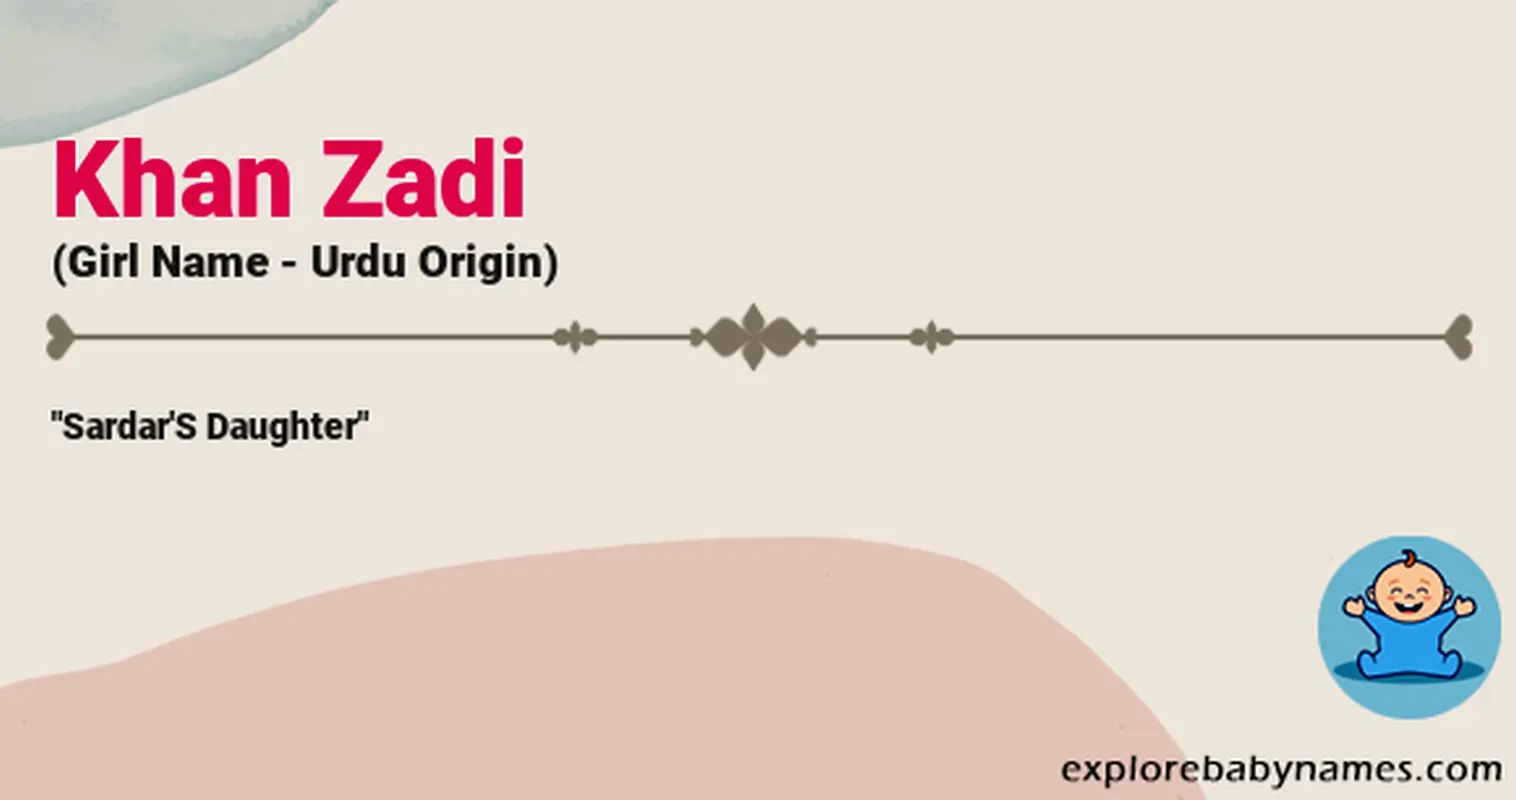 Meaning of Khan Zadi